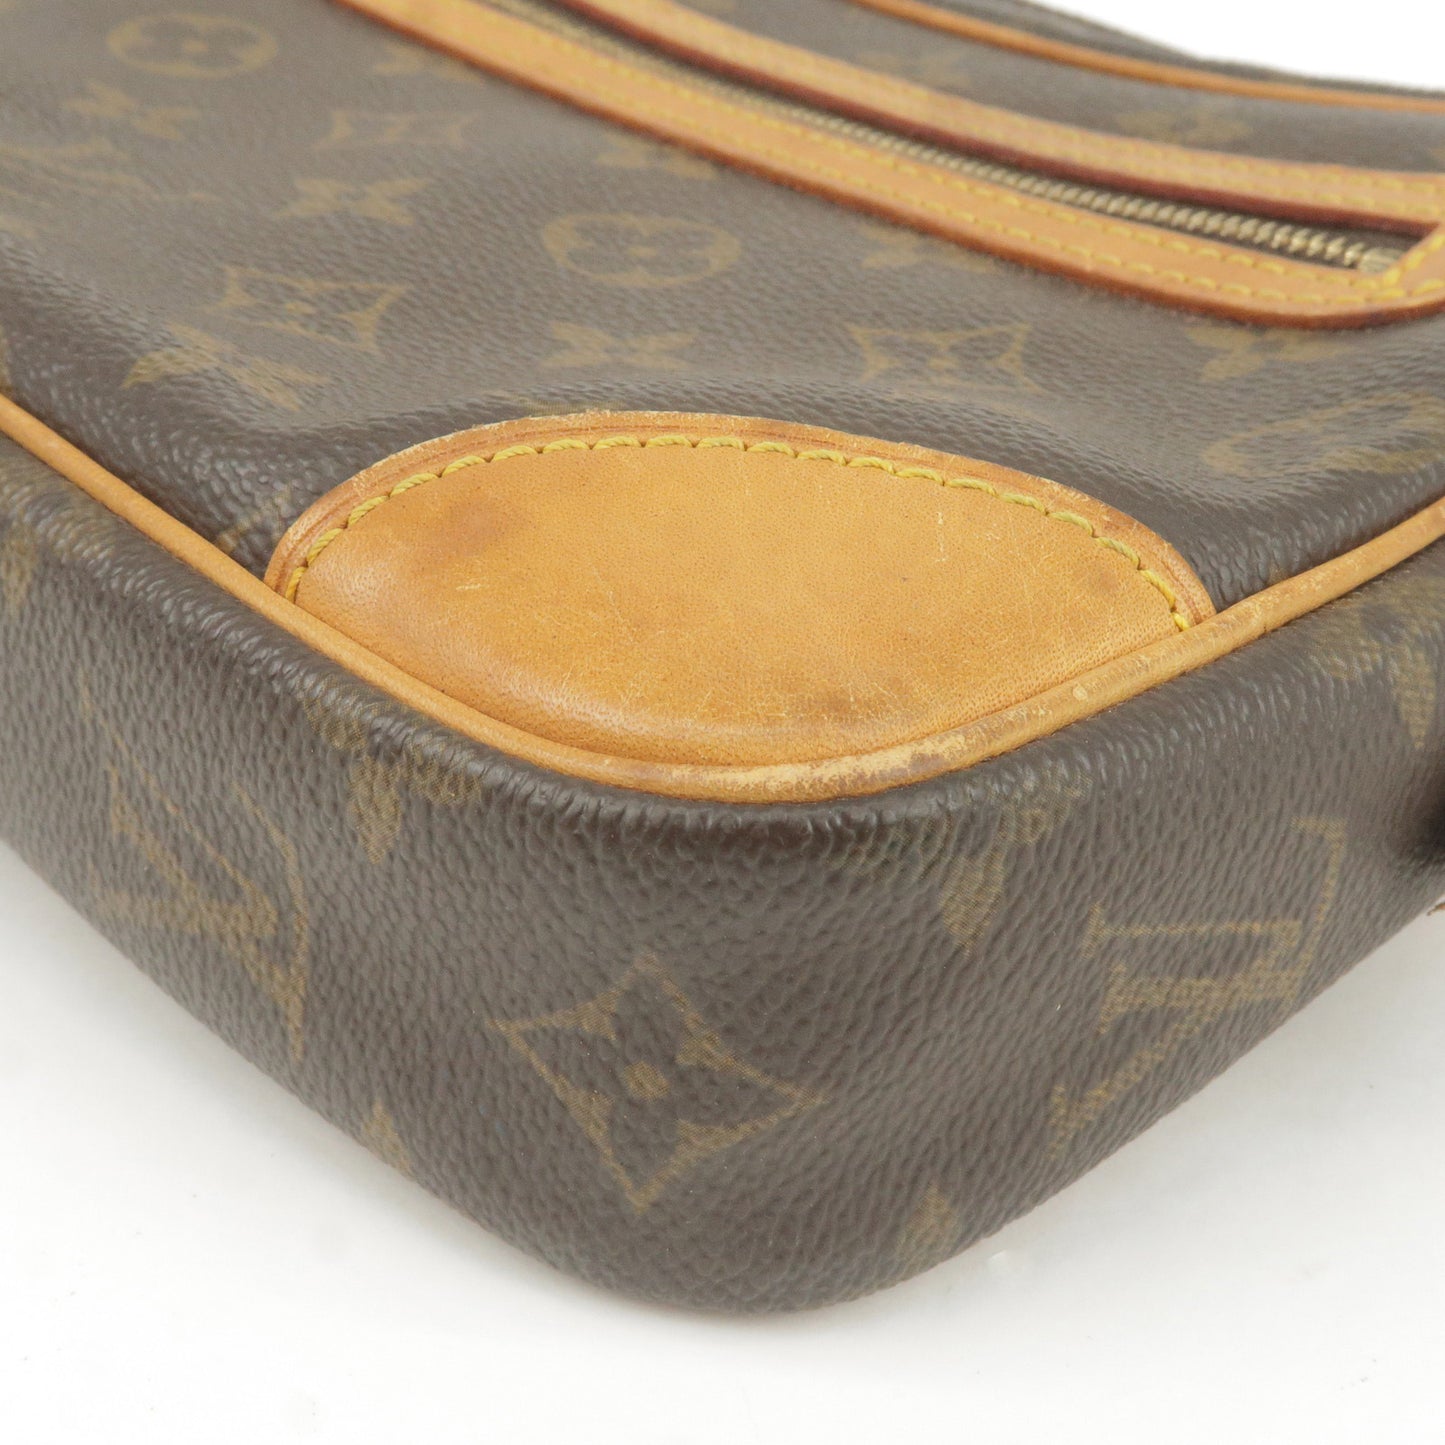 Louis Vuitton Monogram Marly Dragonne GM Clutch Bag M51825